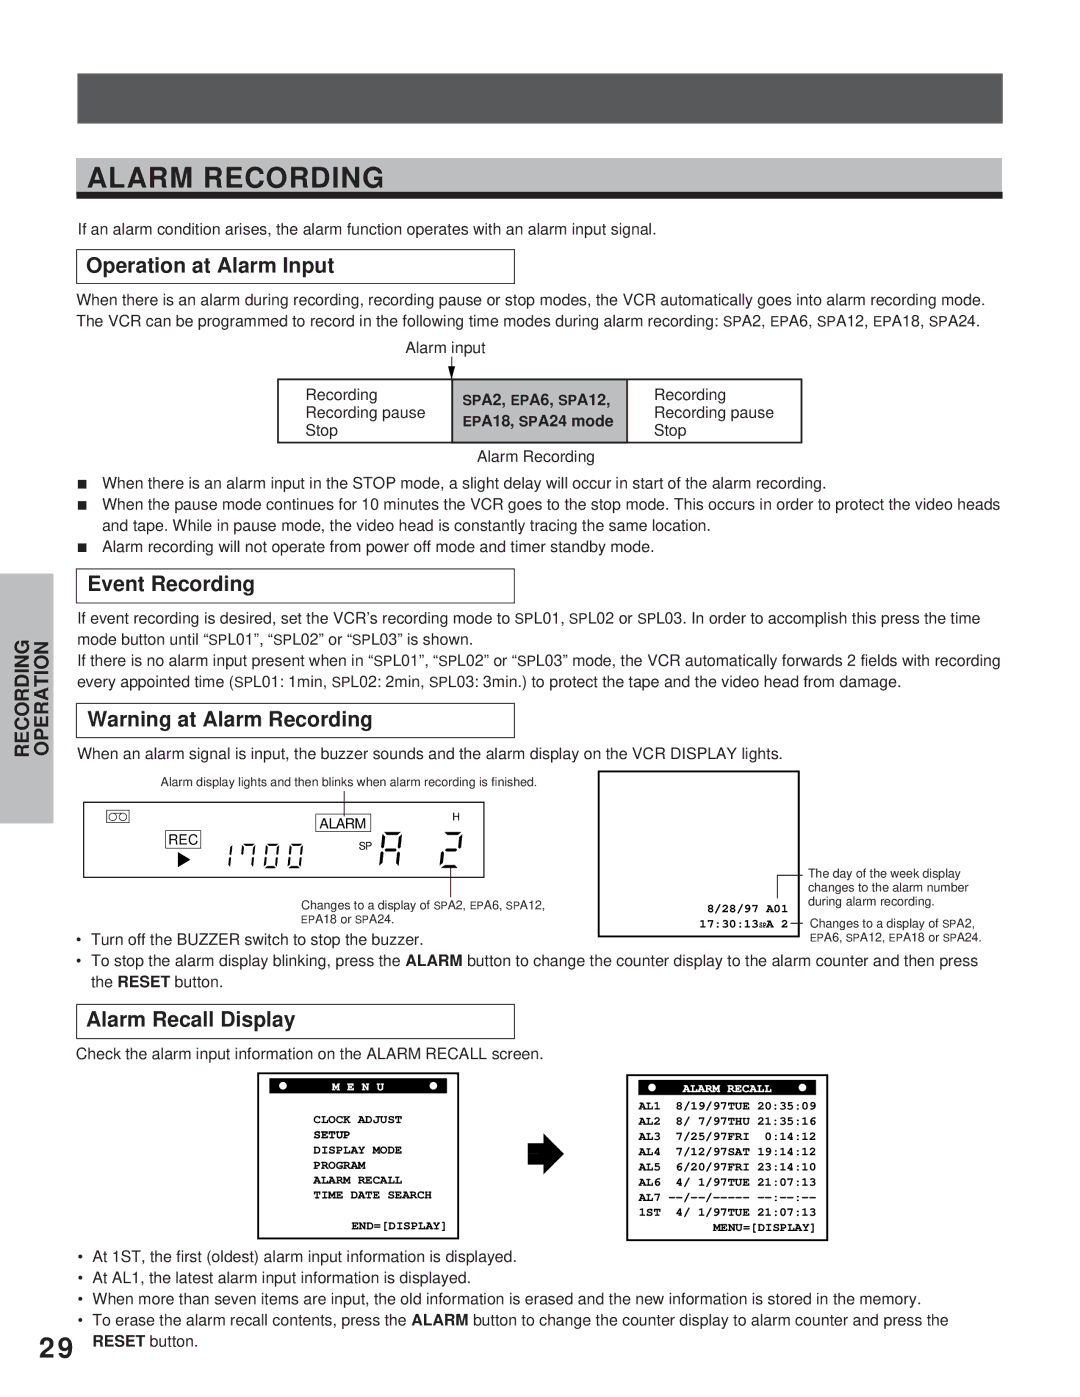 Toshiba kV-9168A instruction manual Alarm Recording, Operation at Alarm Input, Event Recording, Alarm Recall Display 